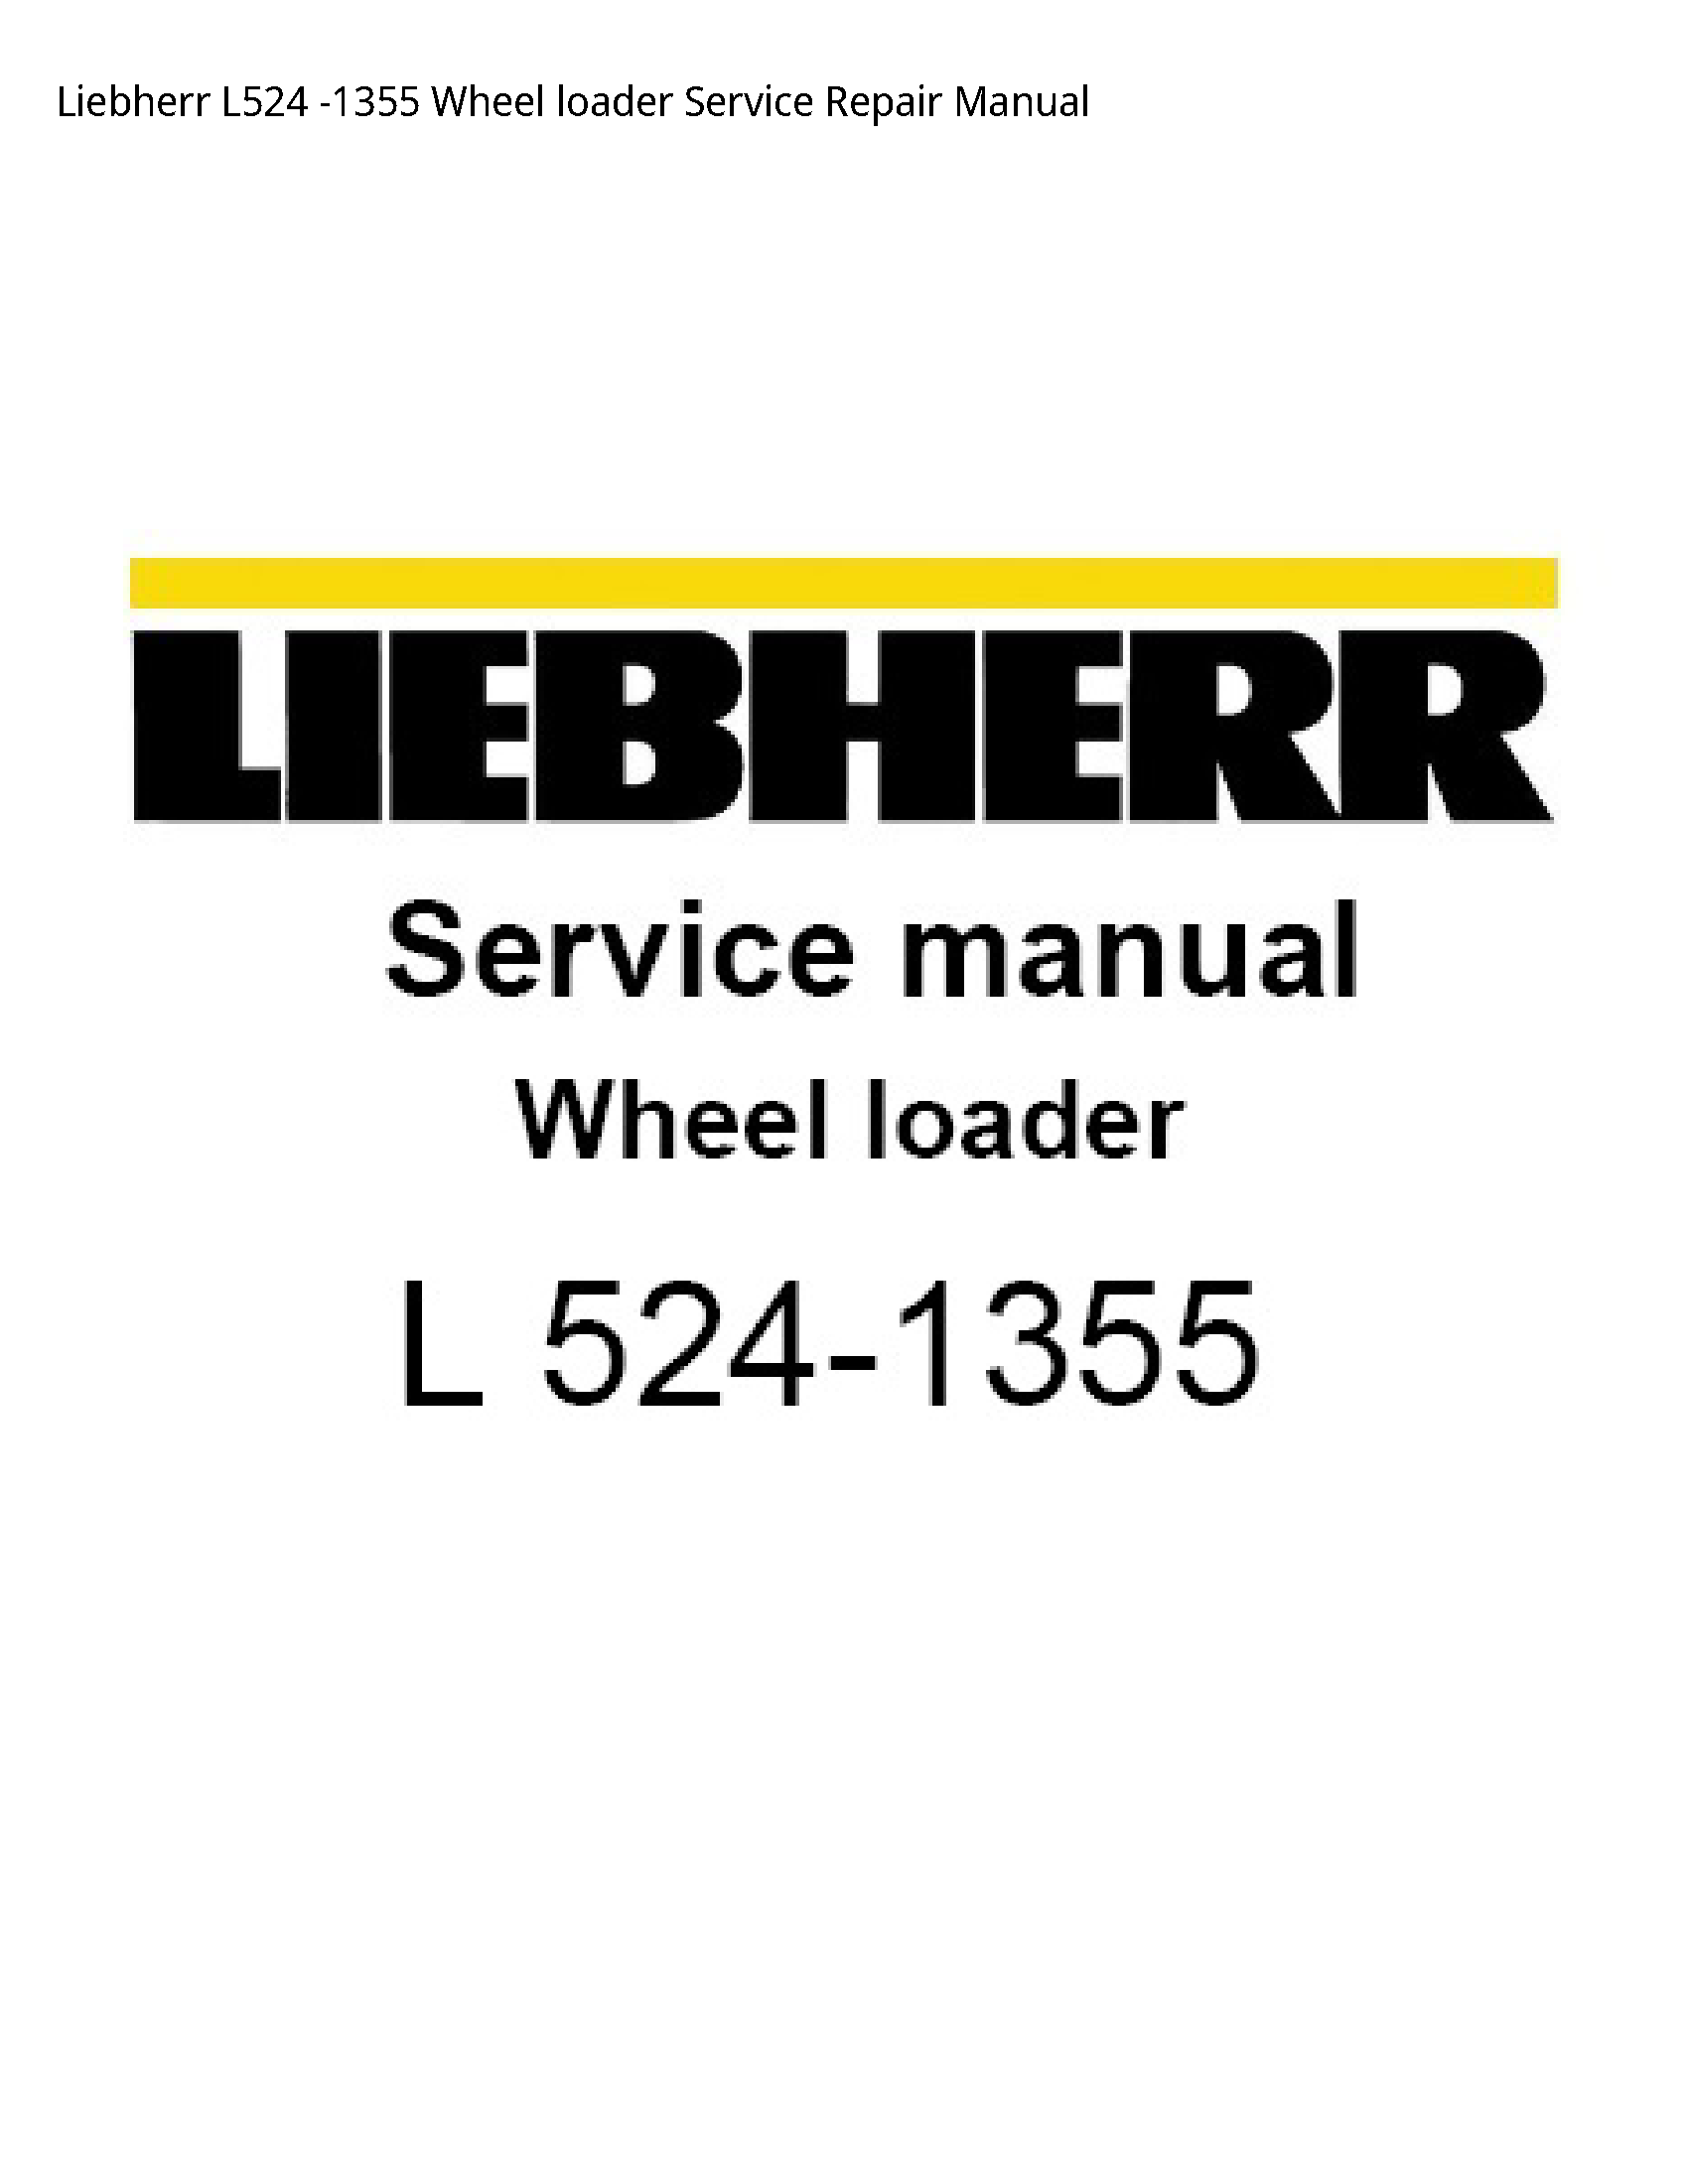 Liebherr L524 Wheel loader manual